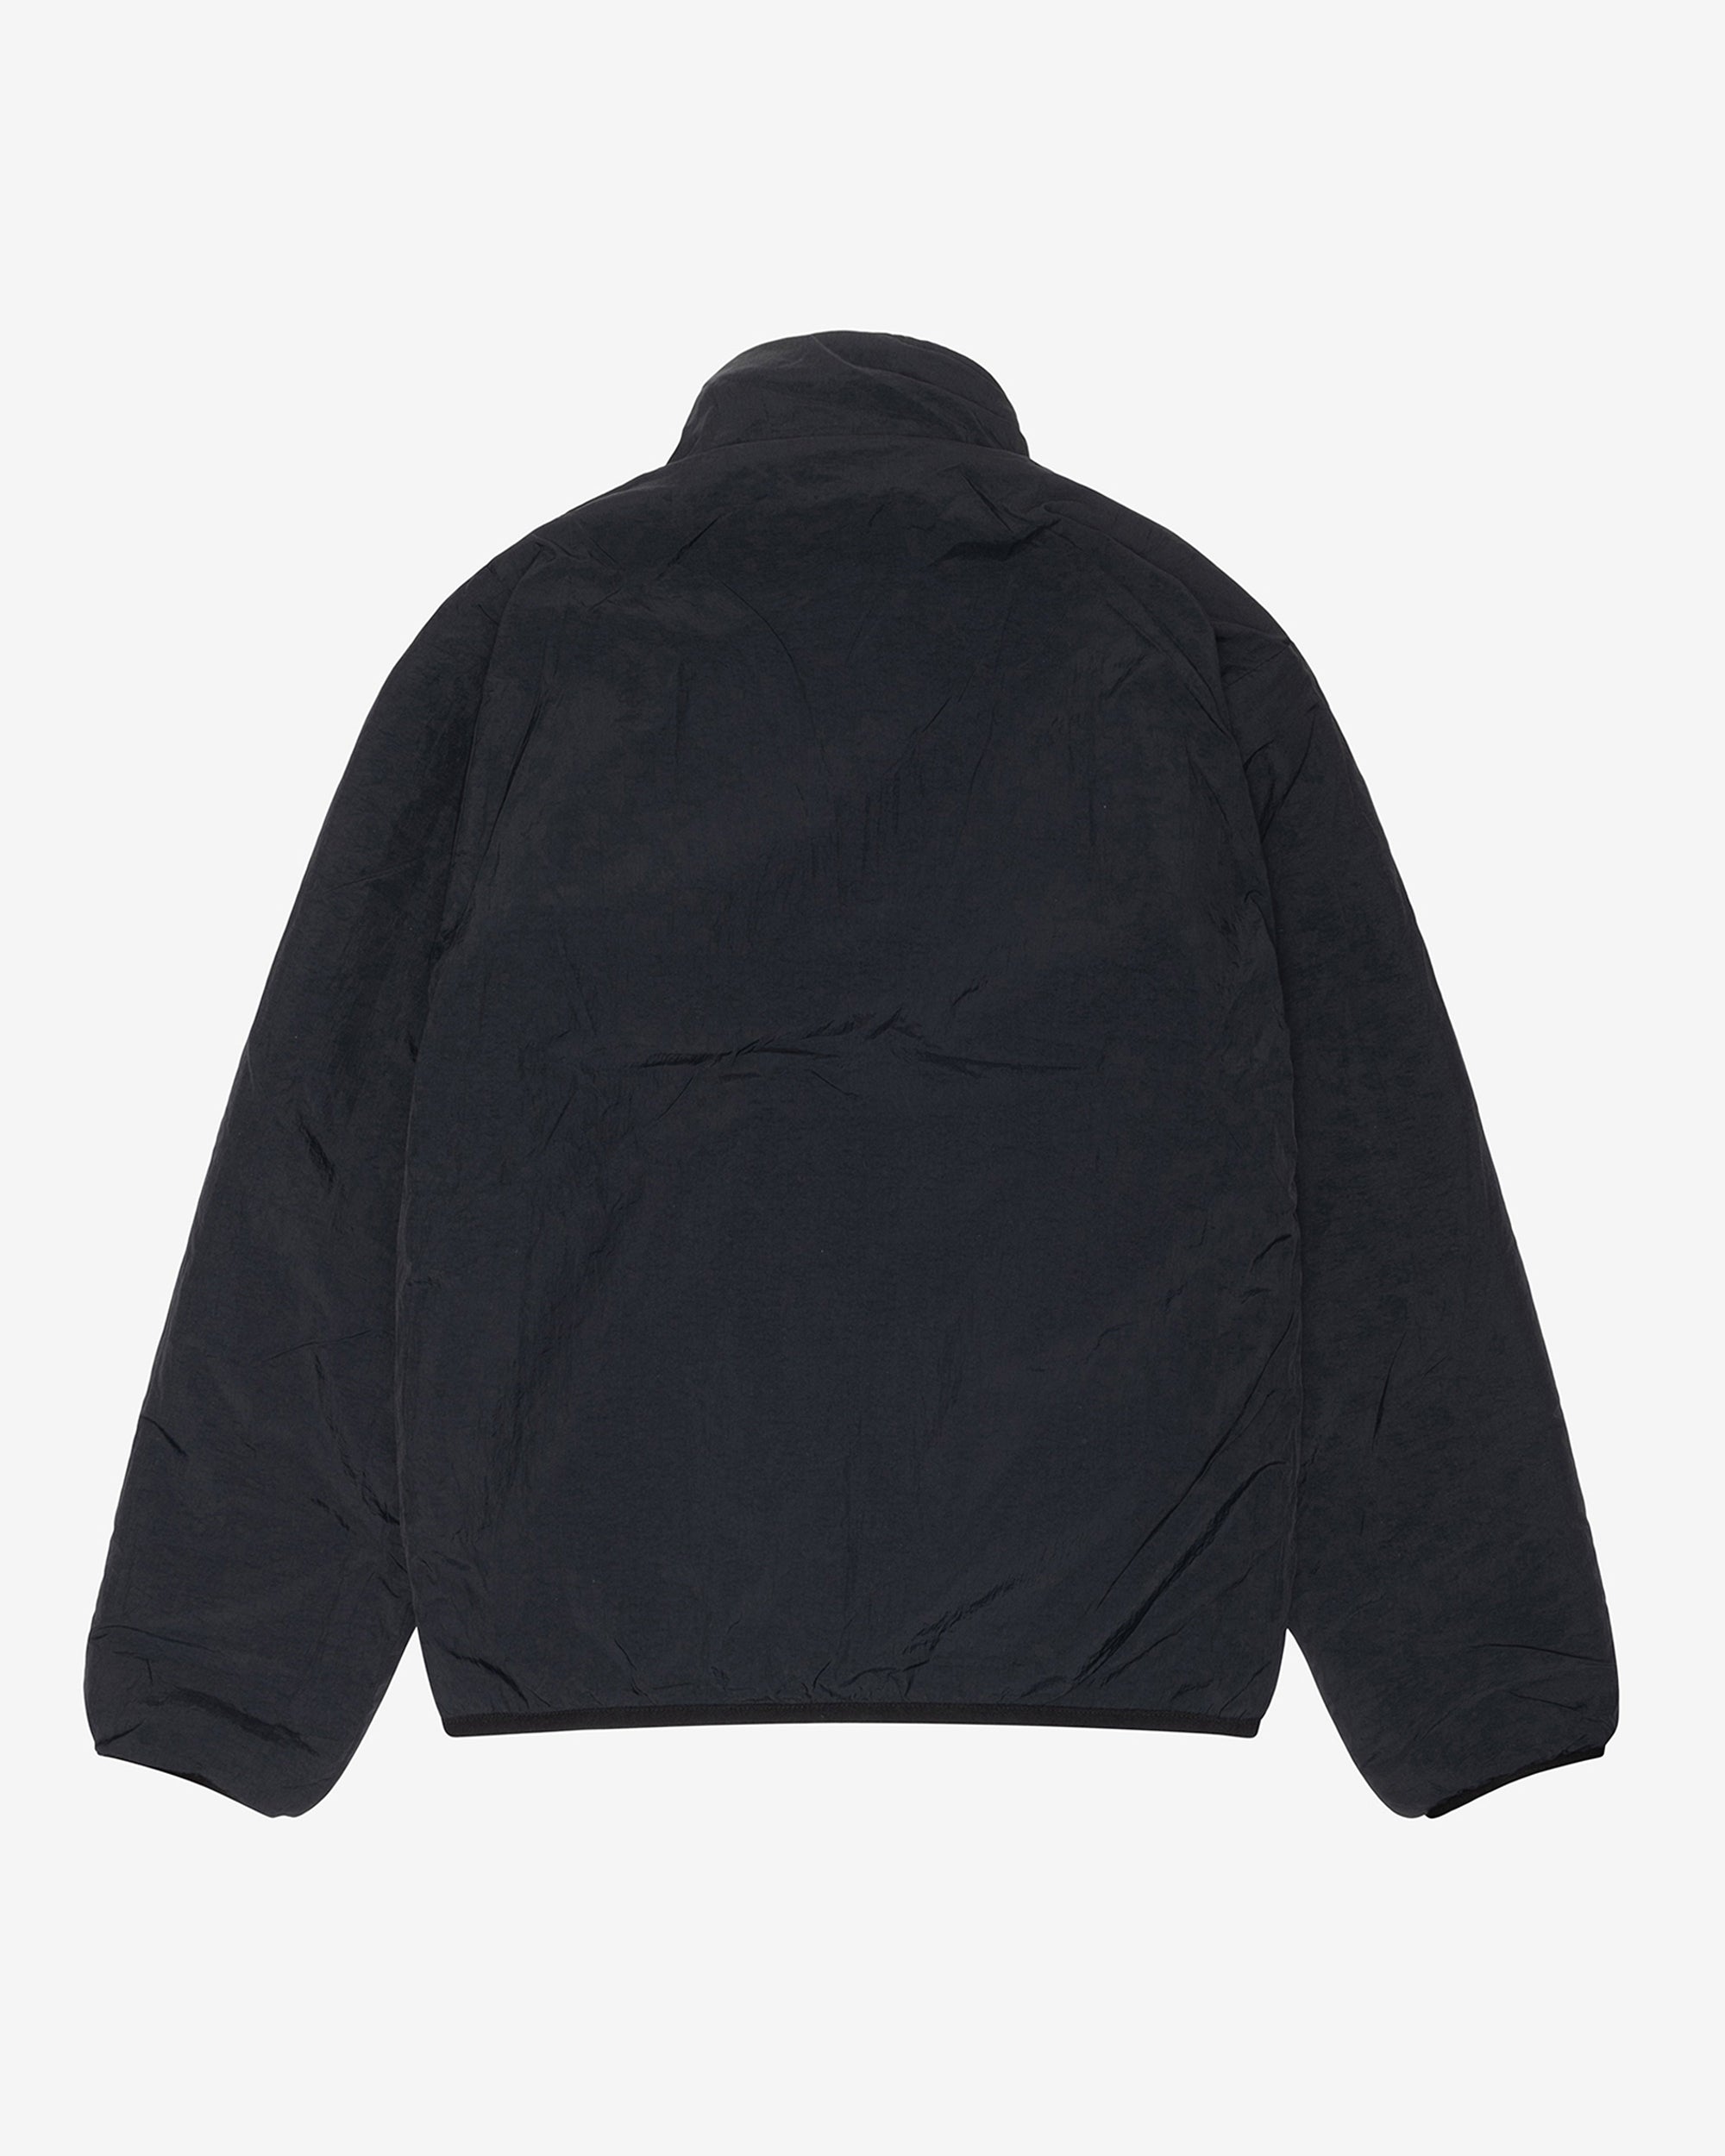 Stüssy - Men's Sherpa Reversible Jacket - (Black) view 4